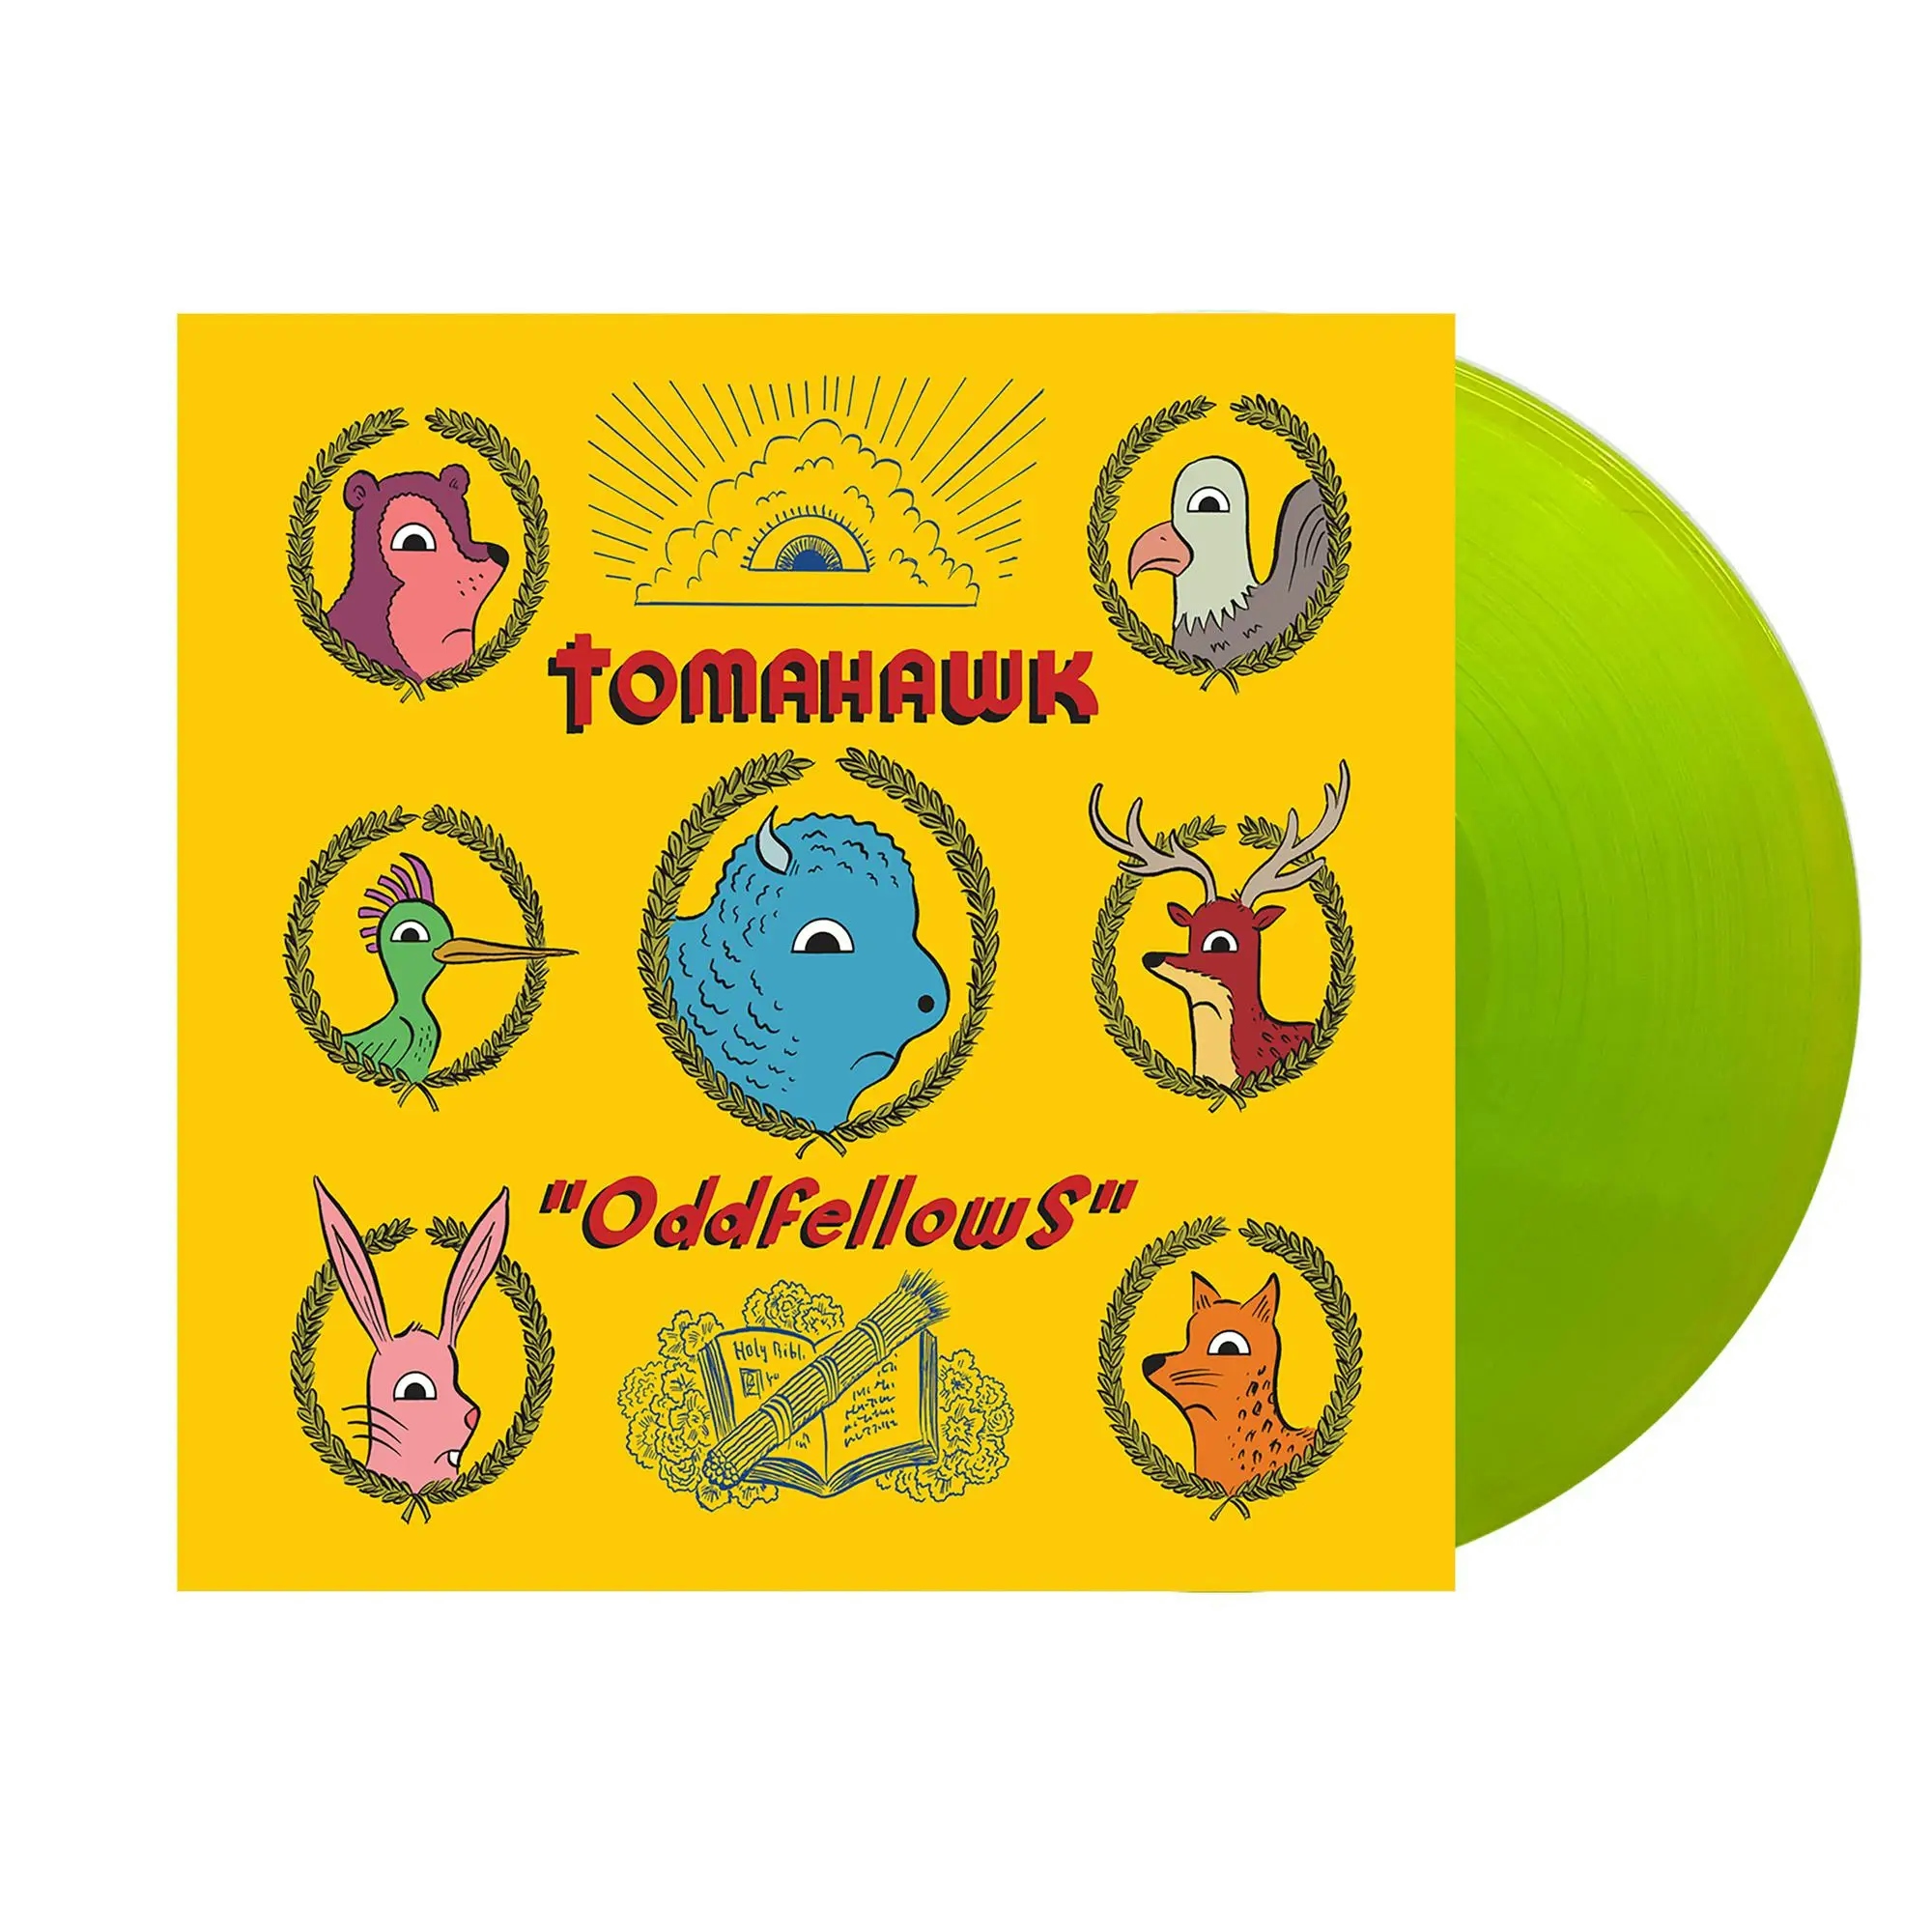 Album artwork for Oddfellows by Tomahawk